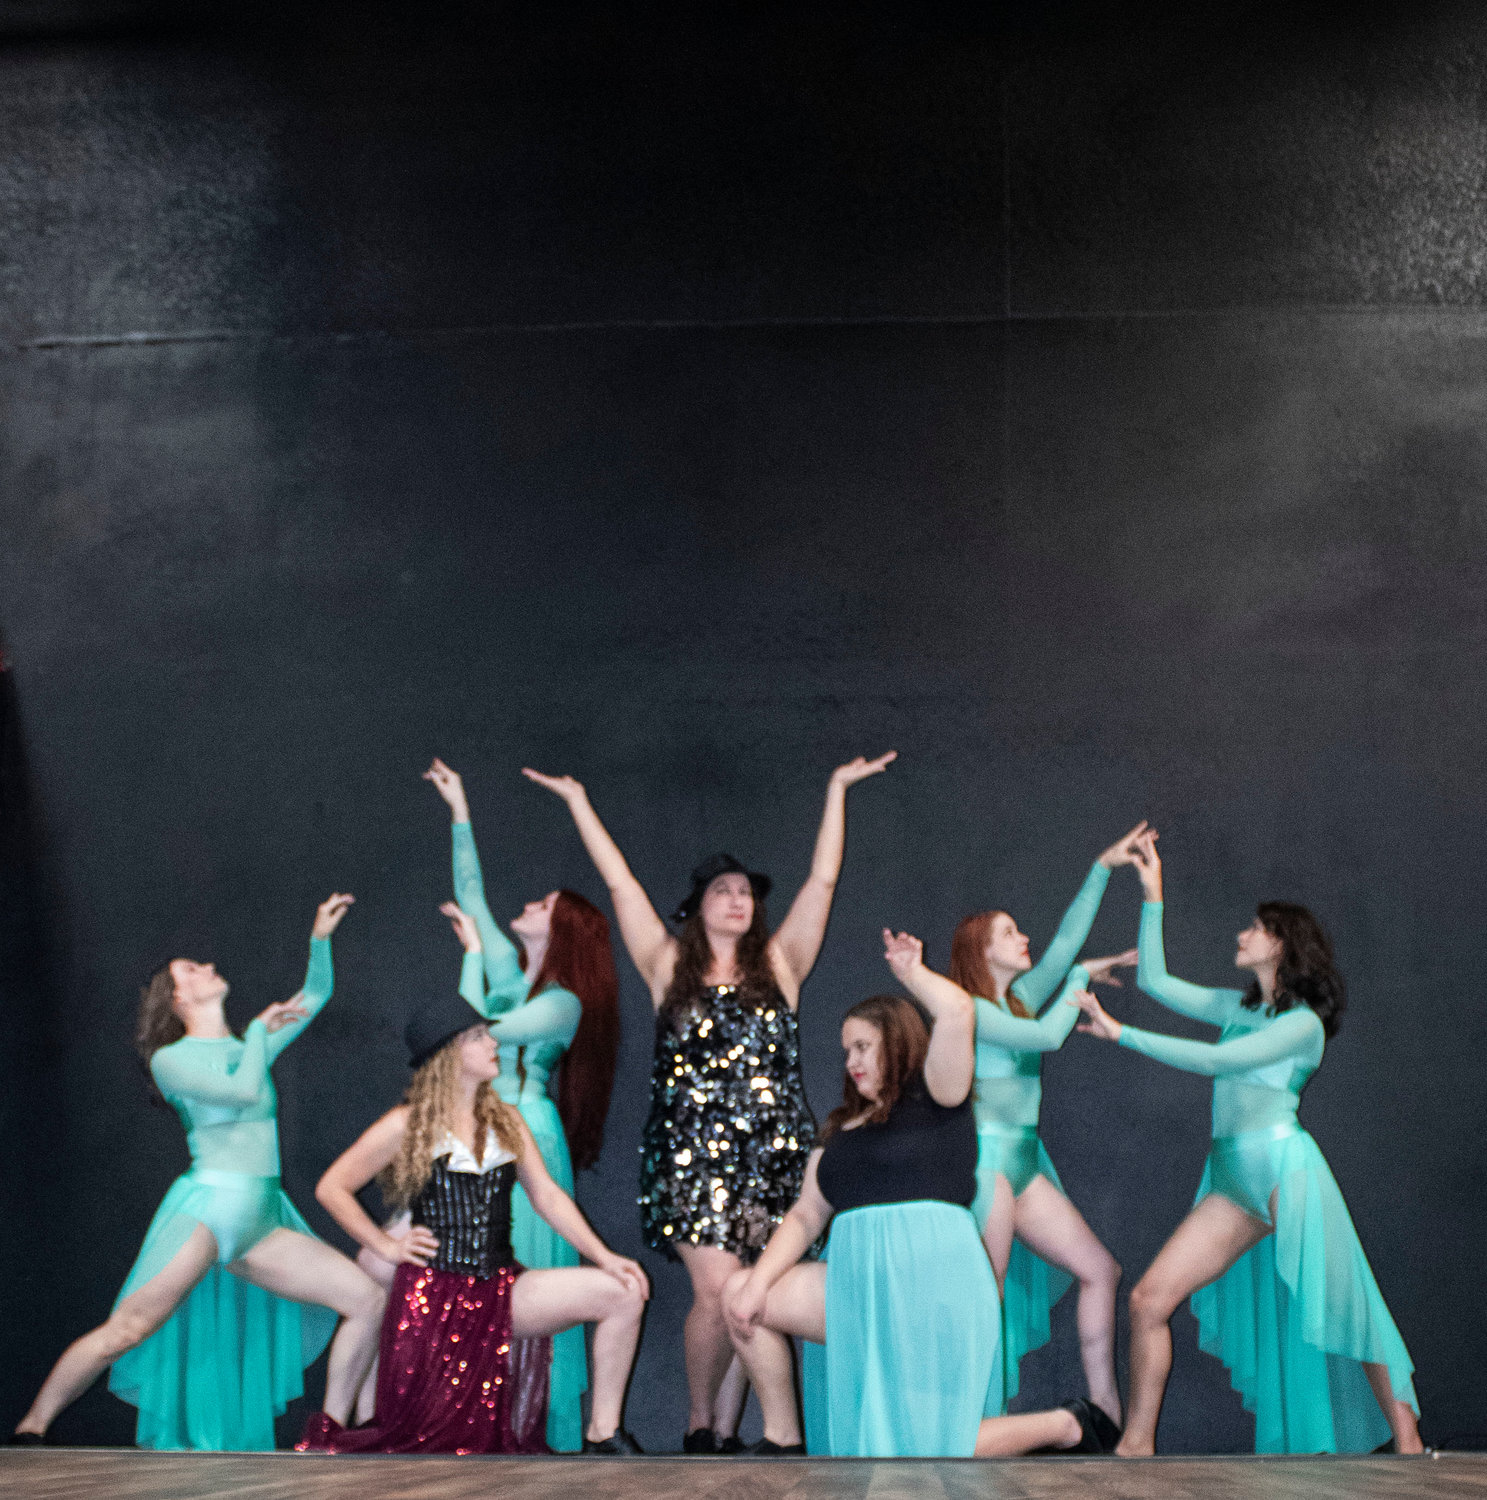 The Dance Eclectic dancers are, left to right, Morgan Rivera, Stephanie Beauregard, Tiana Potter, Rachel Goodman, Julia Gardenhire, Andrea Severson Lopez and Lisa Moya.